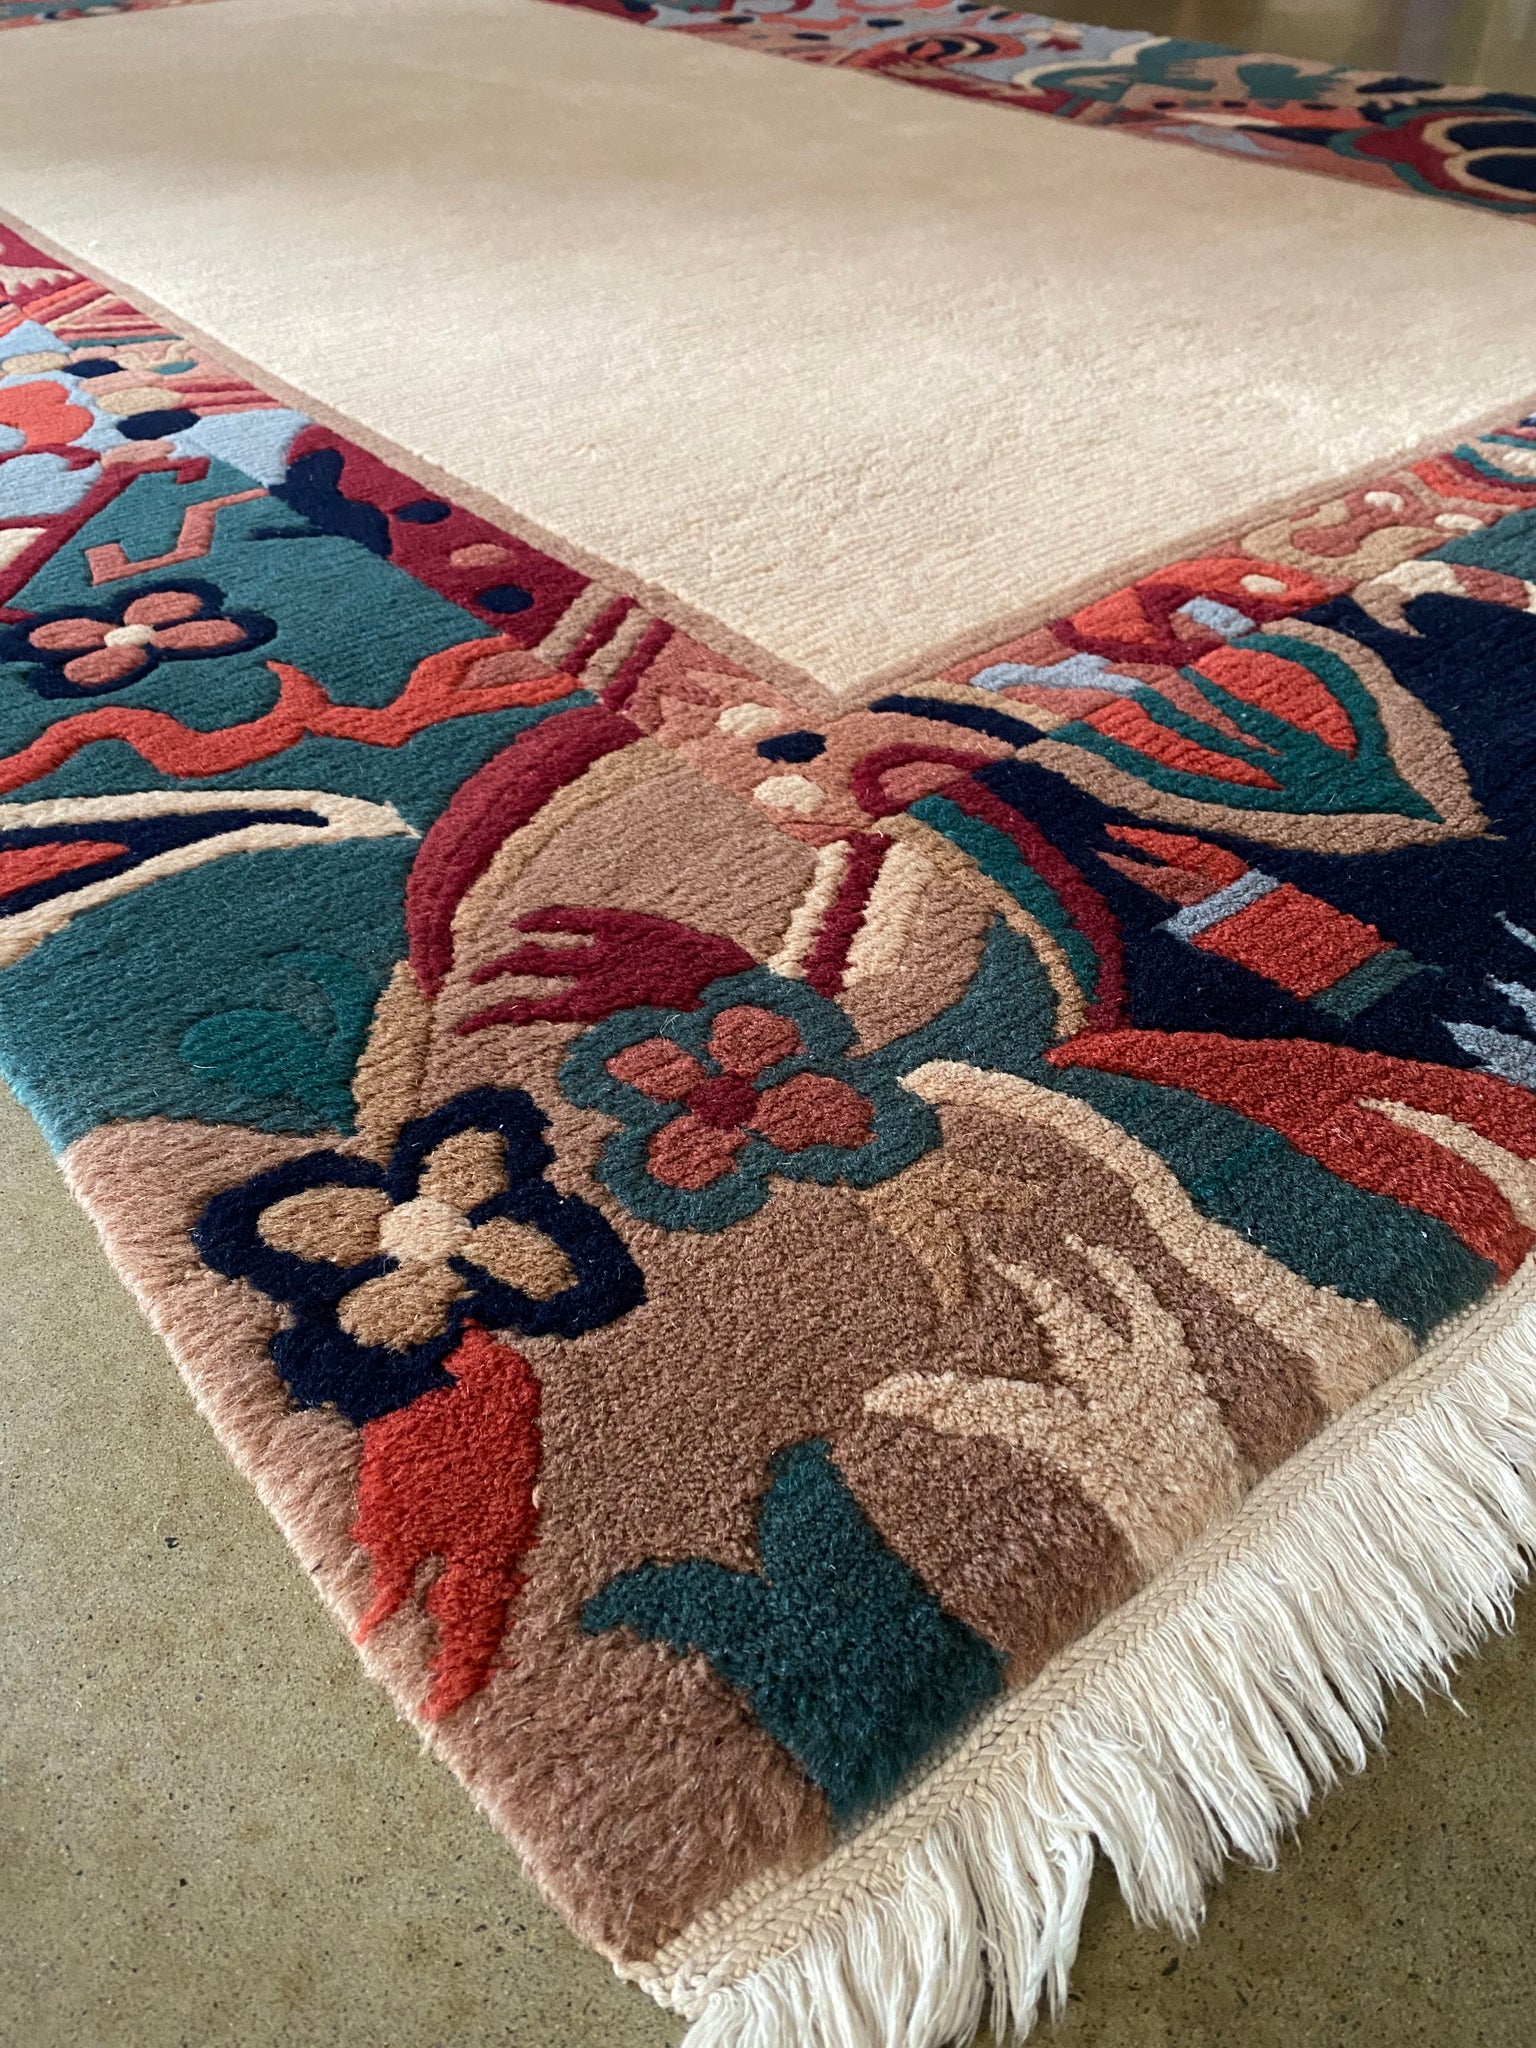 Colorful carpet